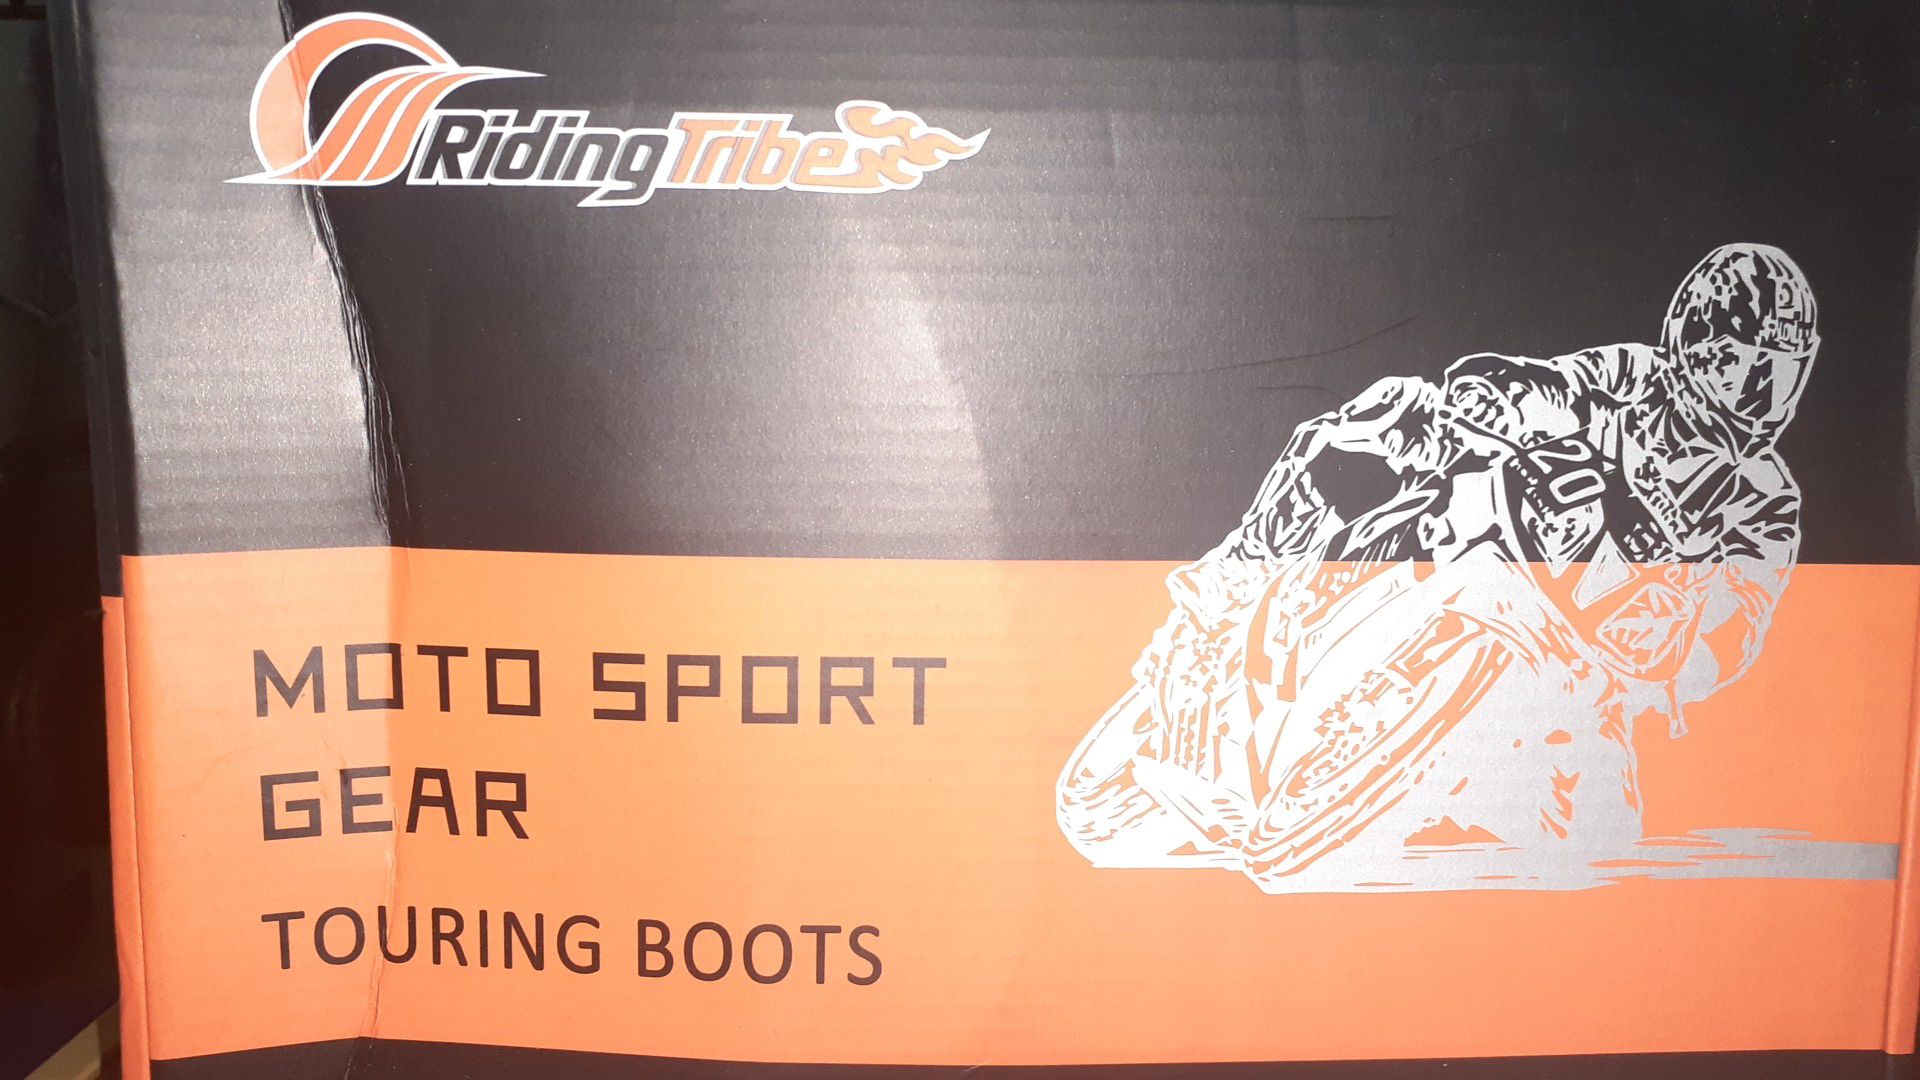 Touring boots Moto Sport Gear